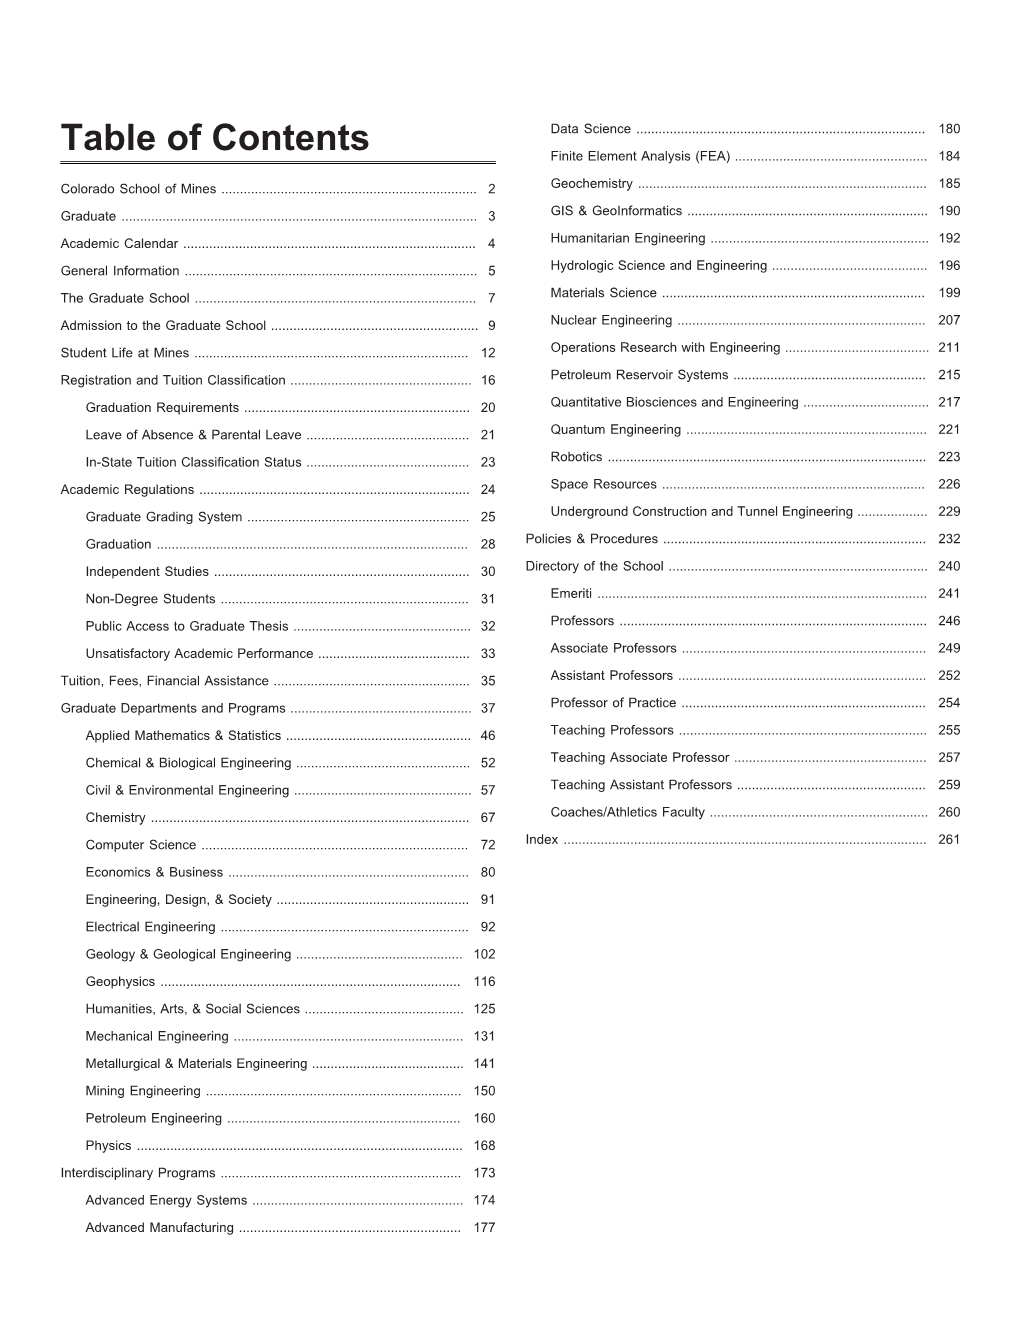 2020-2021 Graduate Catalog